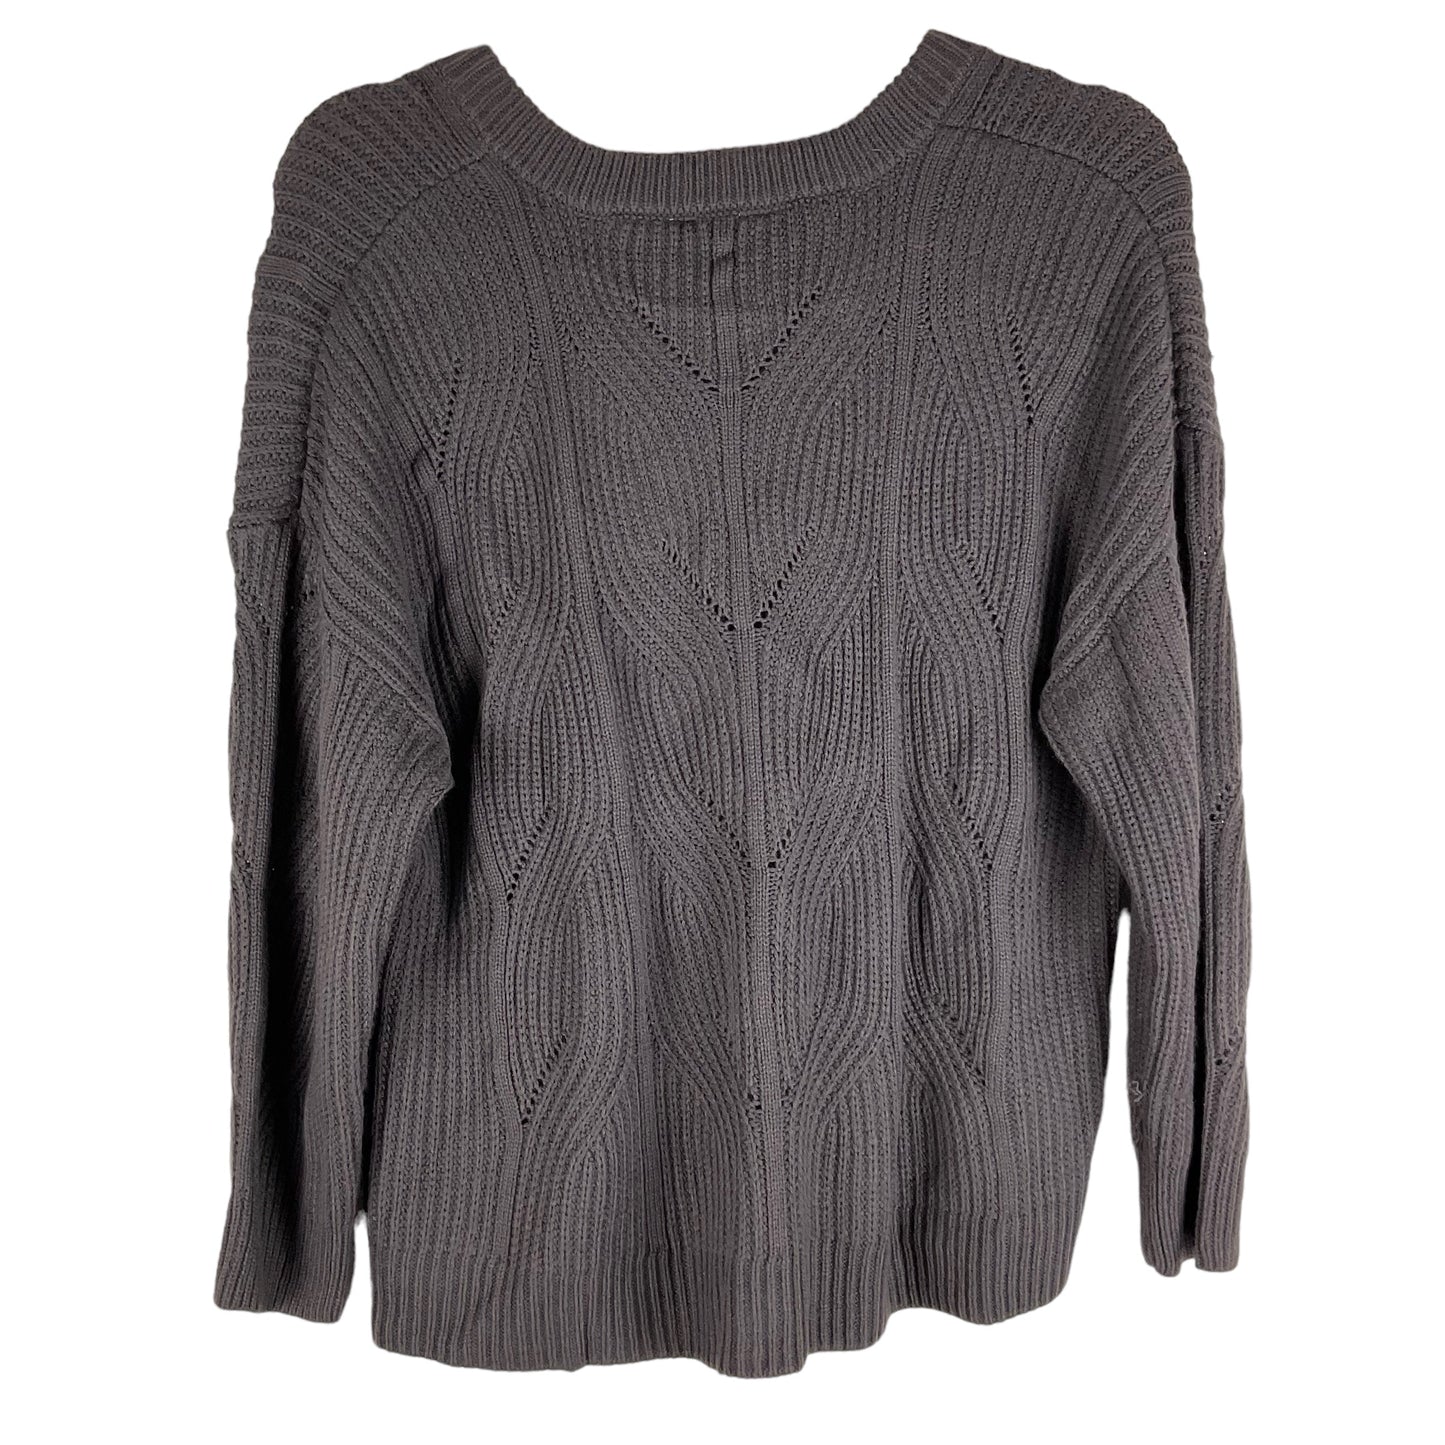 Sweater By Terra & Sky  Size: 3x